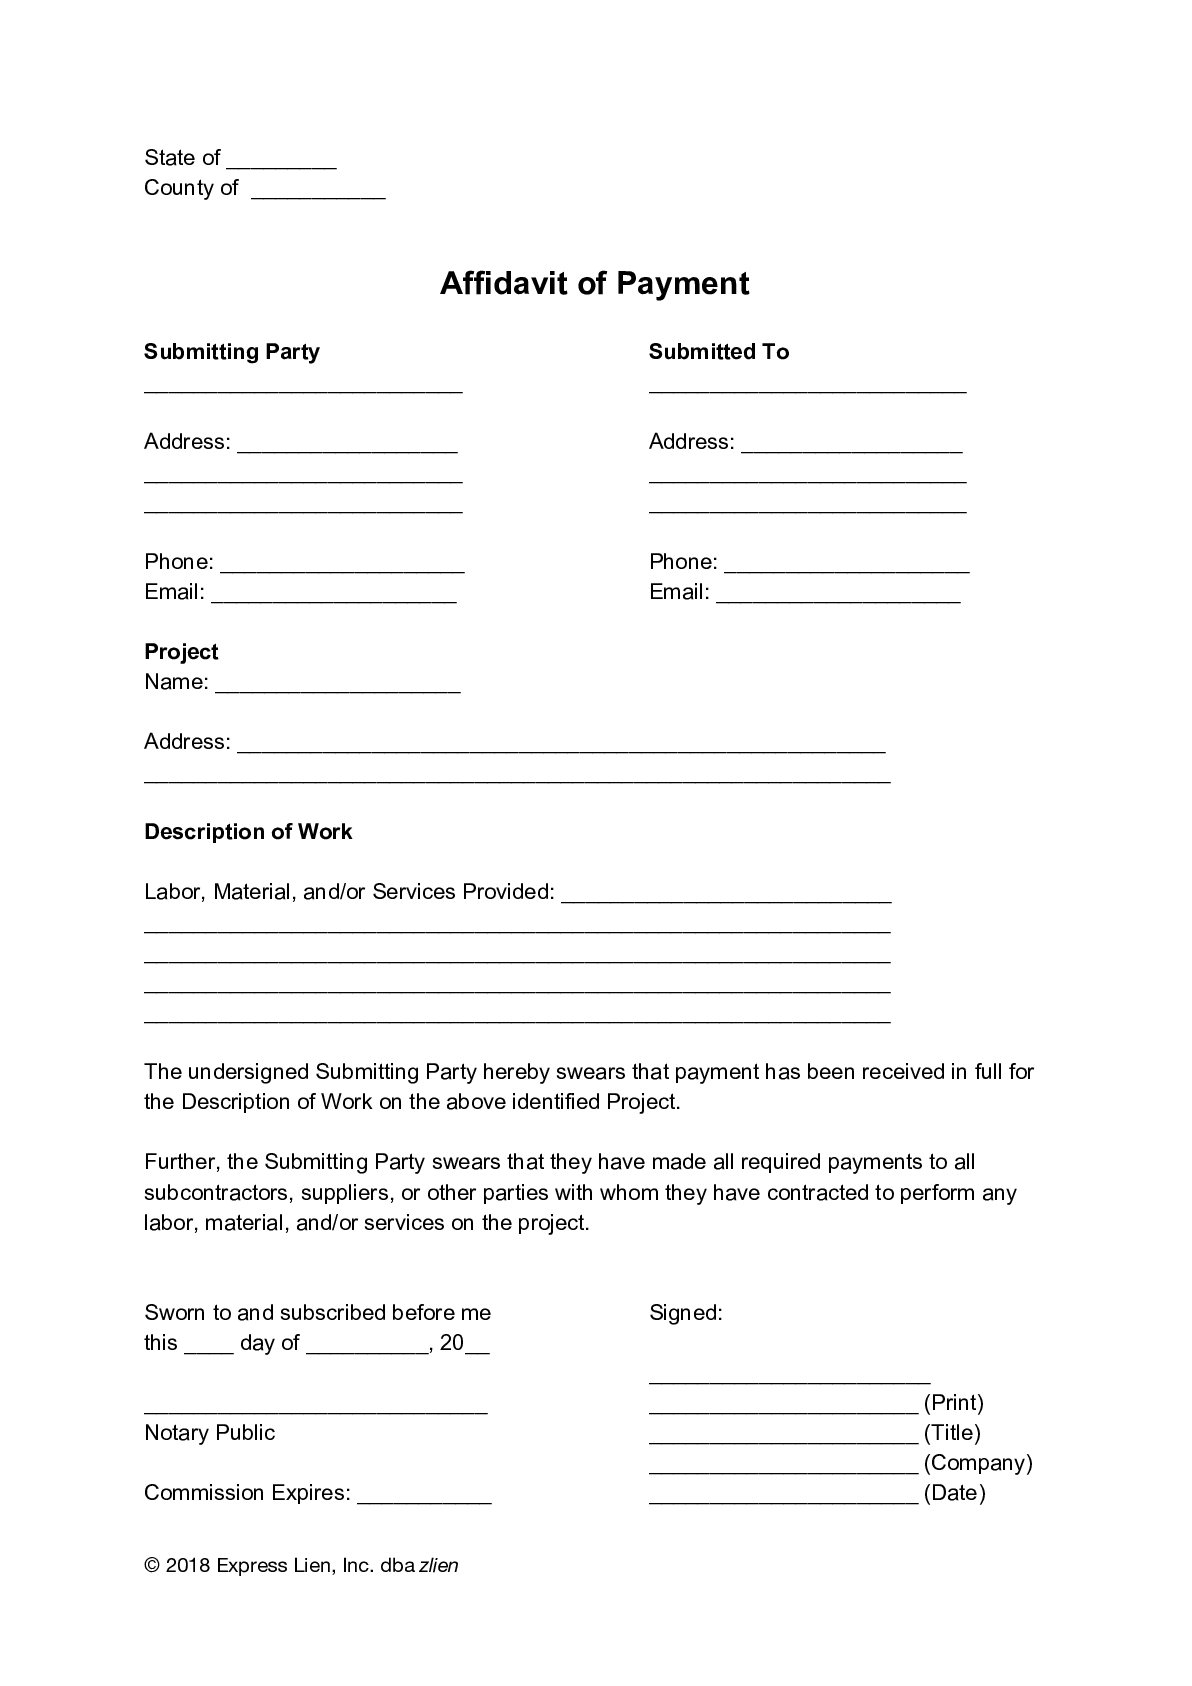 Affidavit of Payment (General) Form